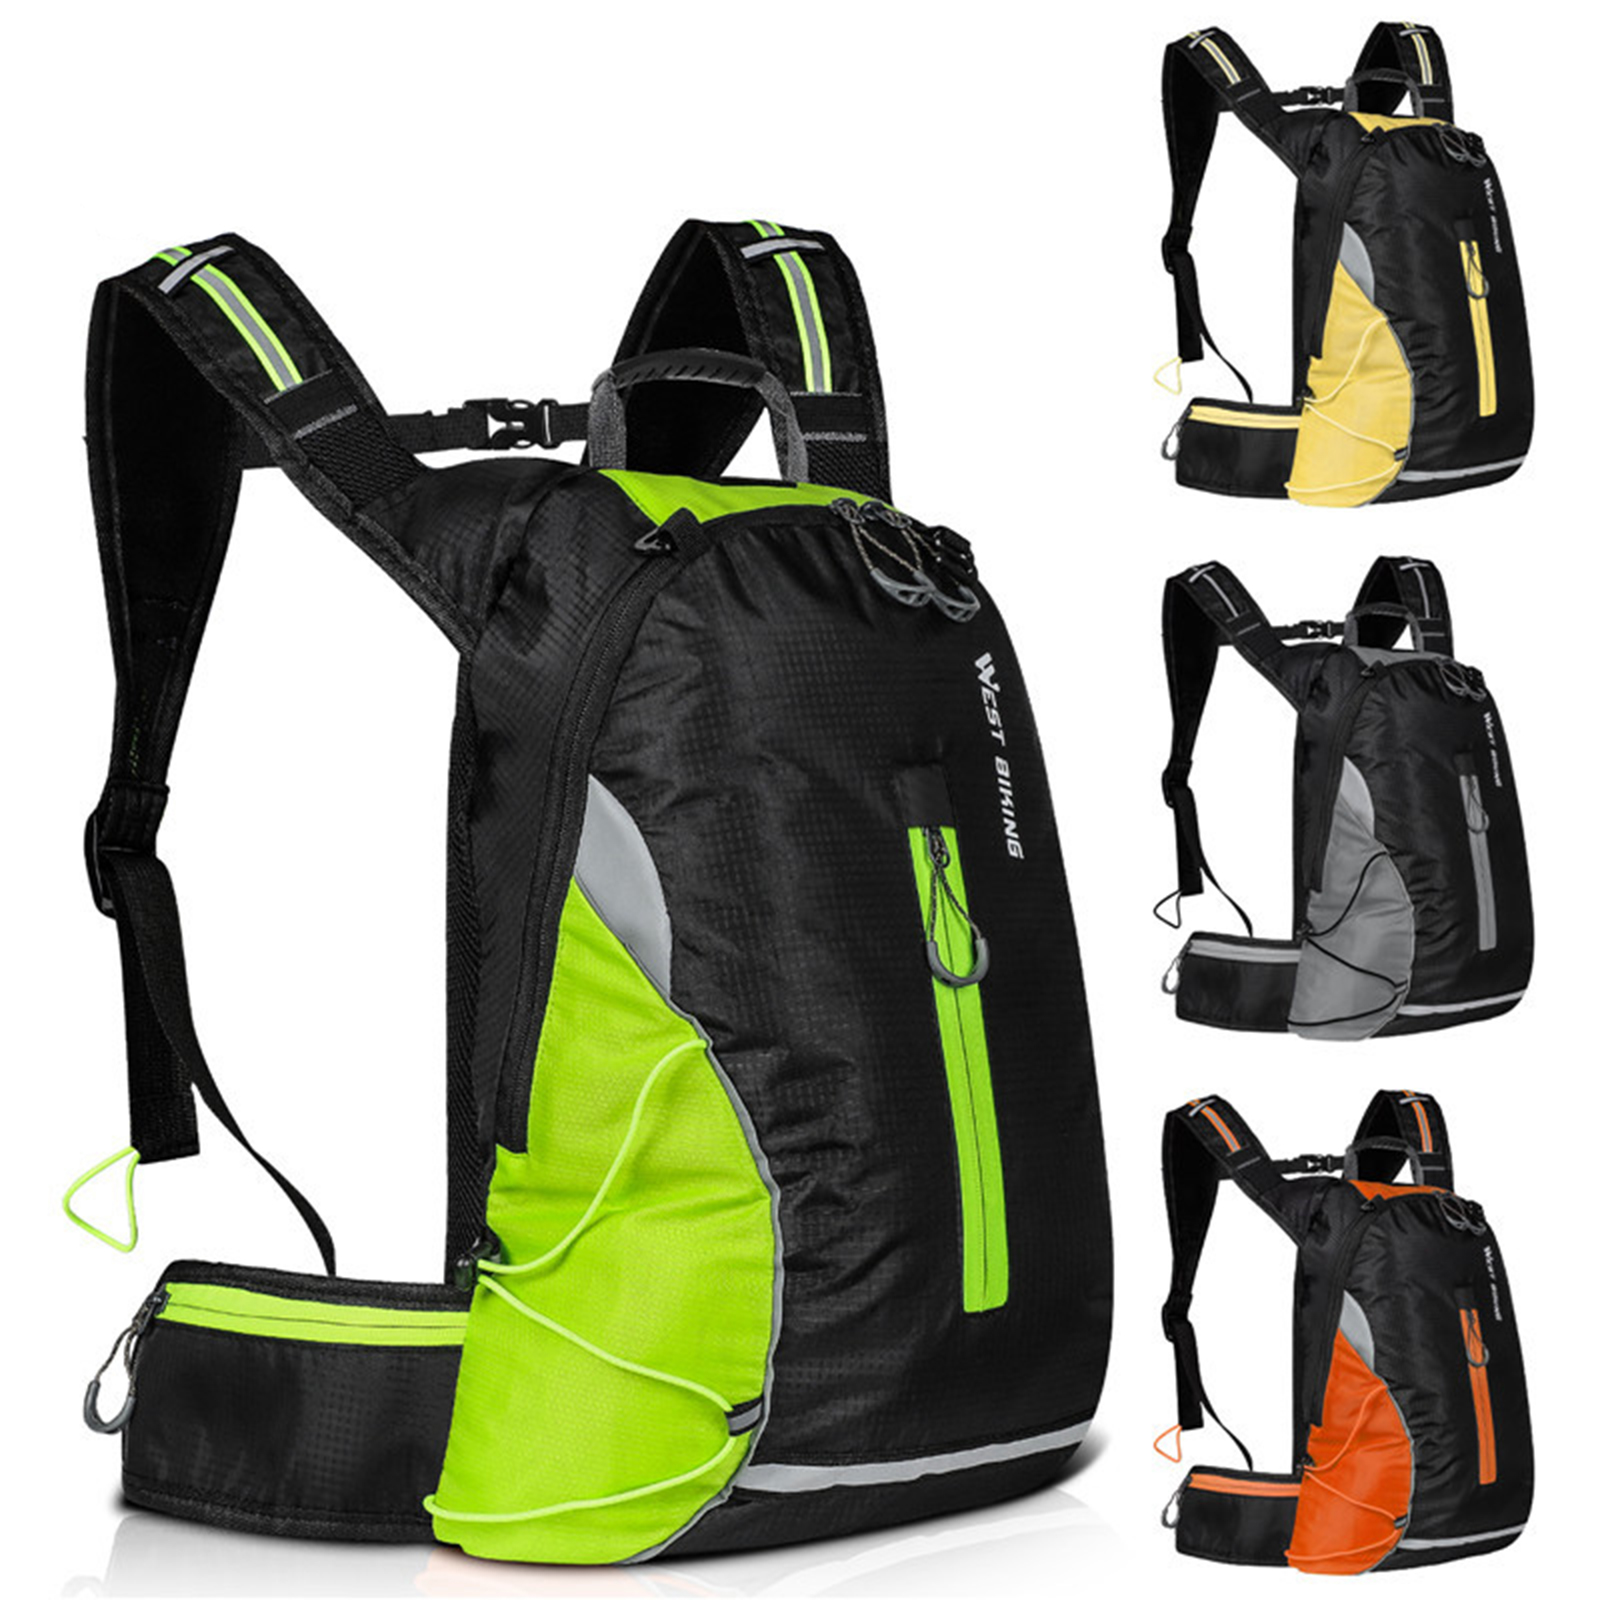 16L Outdoor Hiking Backpack Luggage Waterproof Bag Hiking Travel Multi-Pocket Design Rucksack Comfortable & Breathable Backpack Adjustable Straps - image 1 of 21